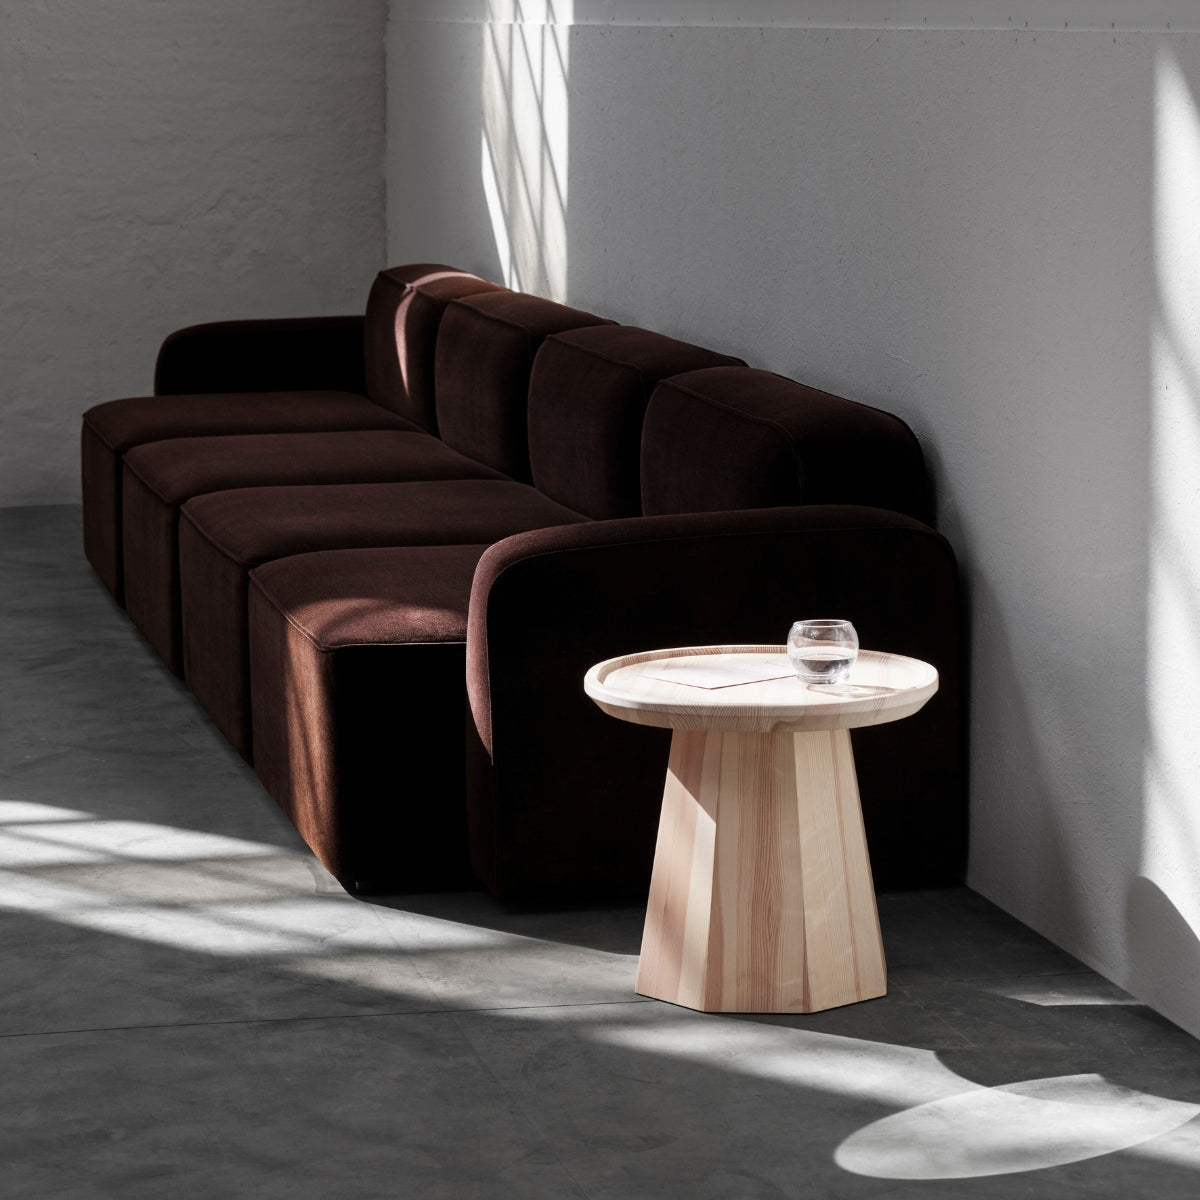 Normann Copenhagen | Pine table - small